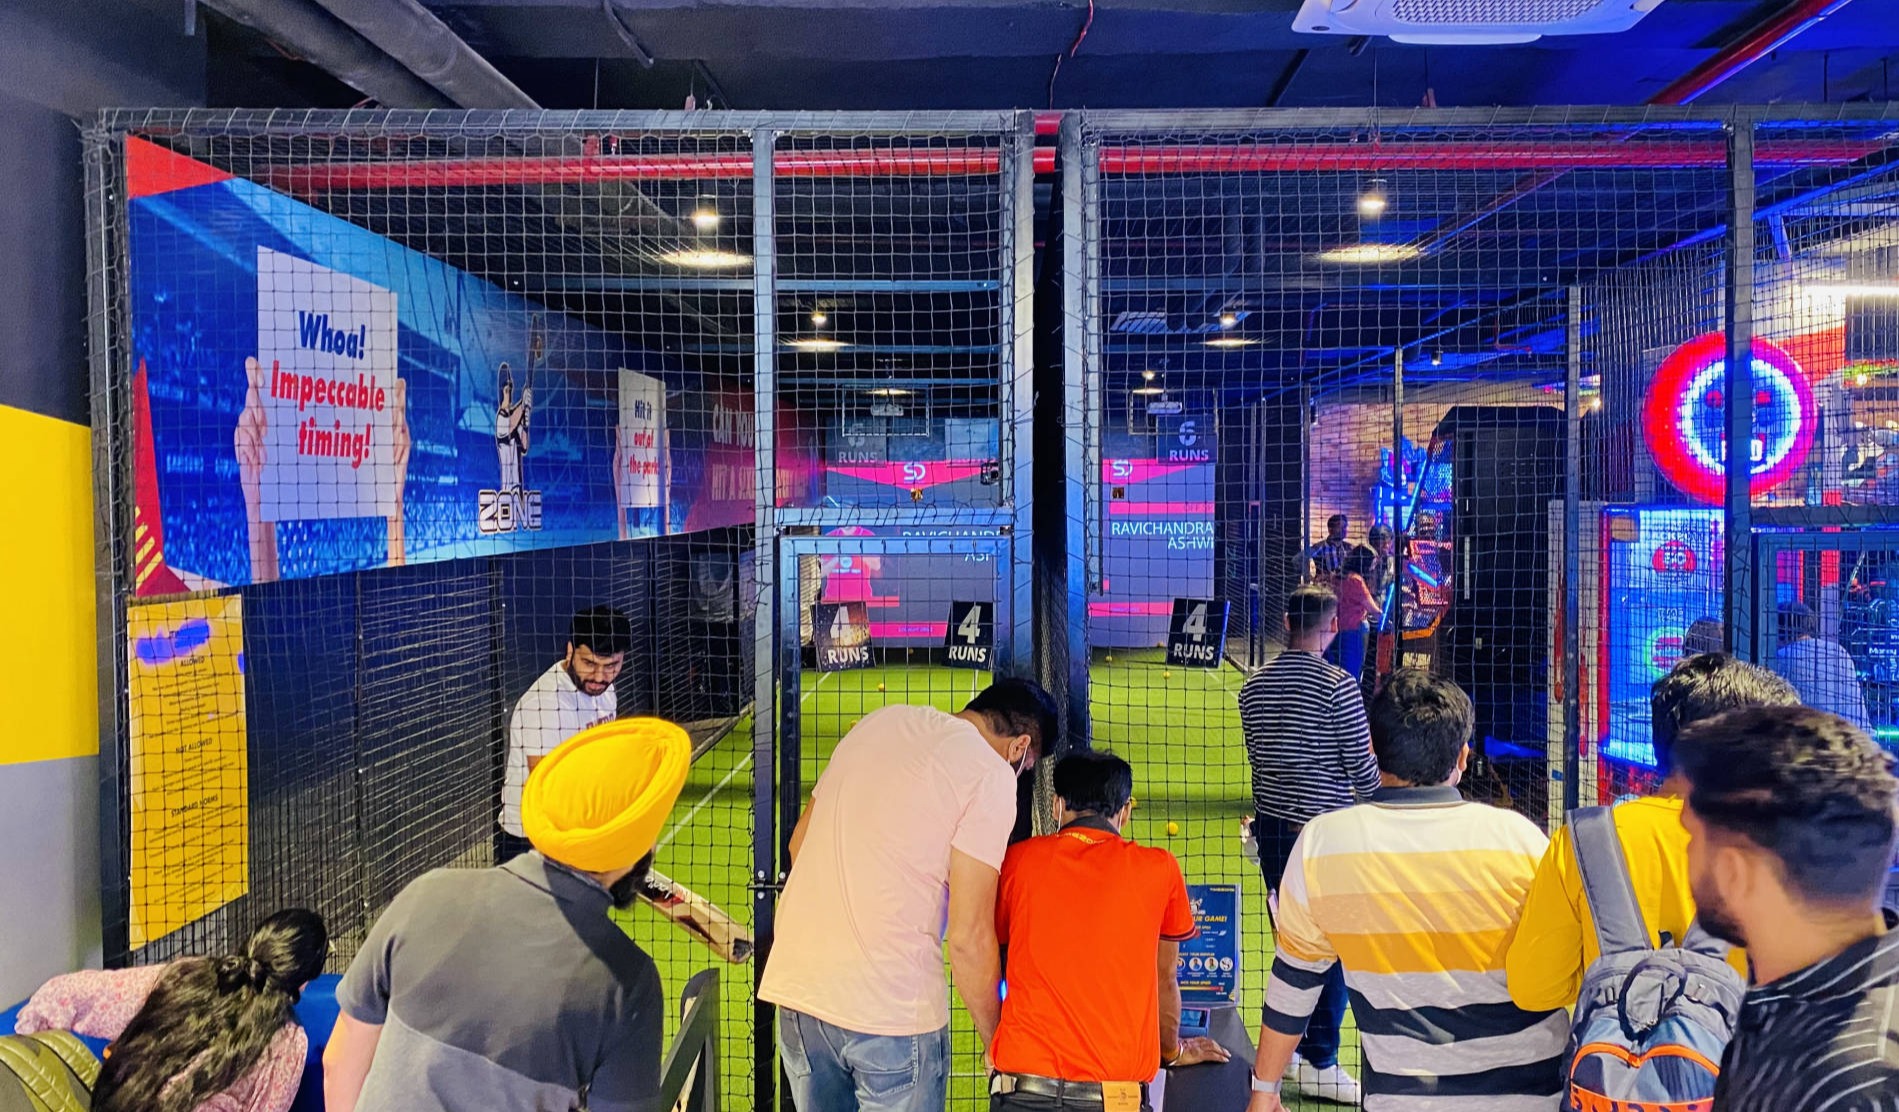 cricket bowling simulator game